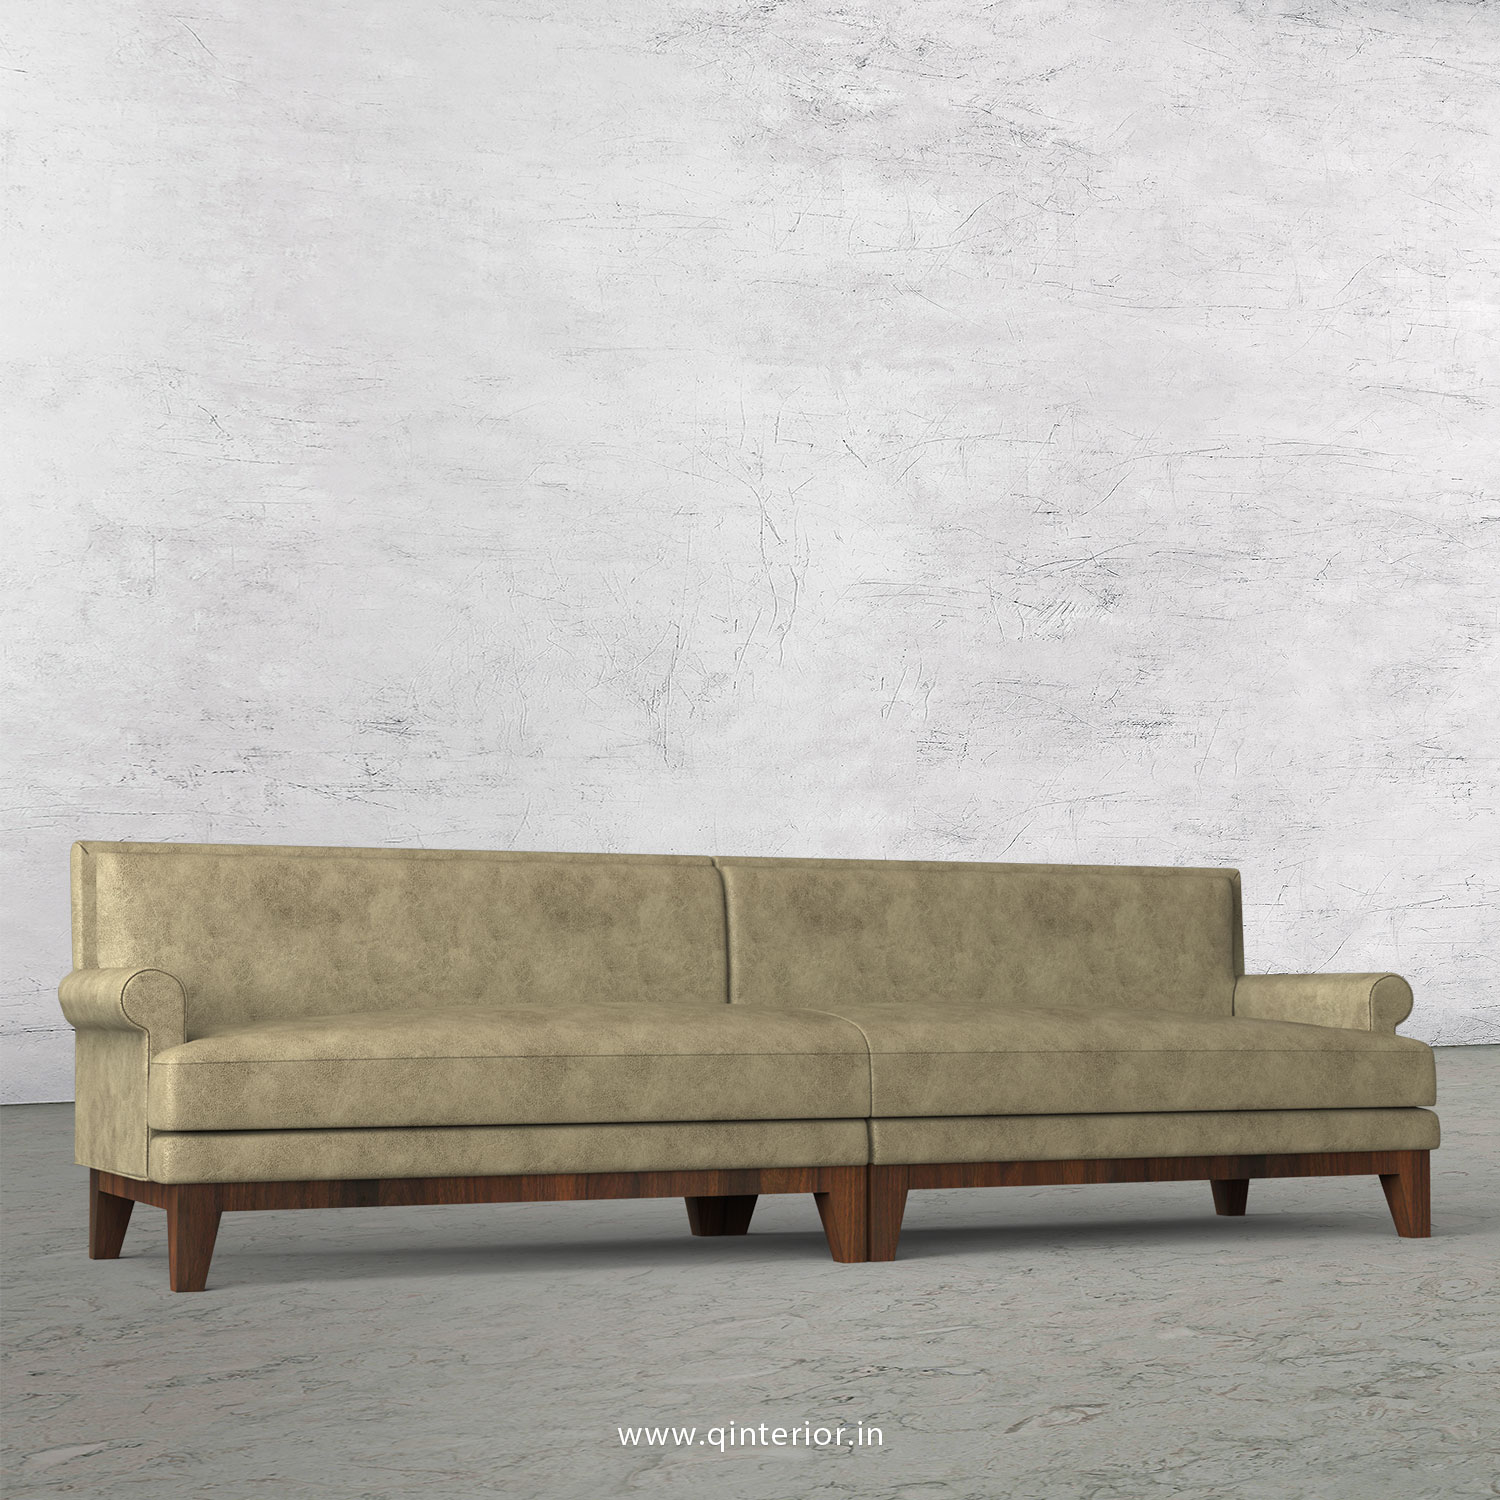 Aviana 4 Seater Sofa in Fab Leather Fabric - SFA001 FL03